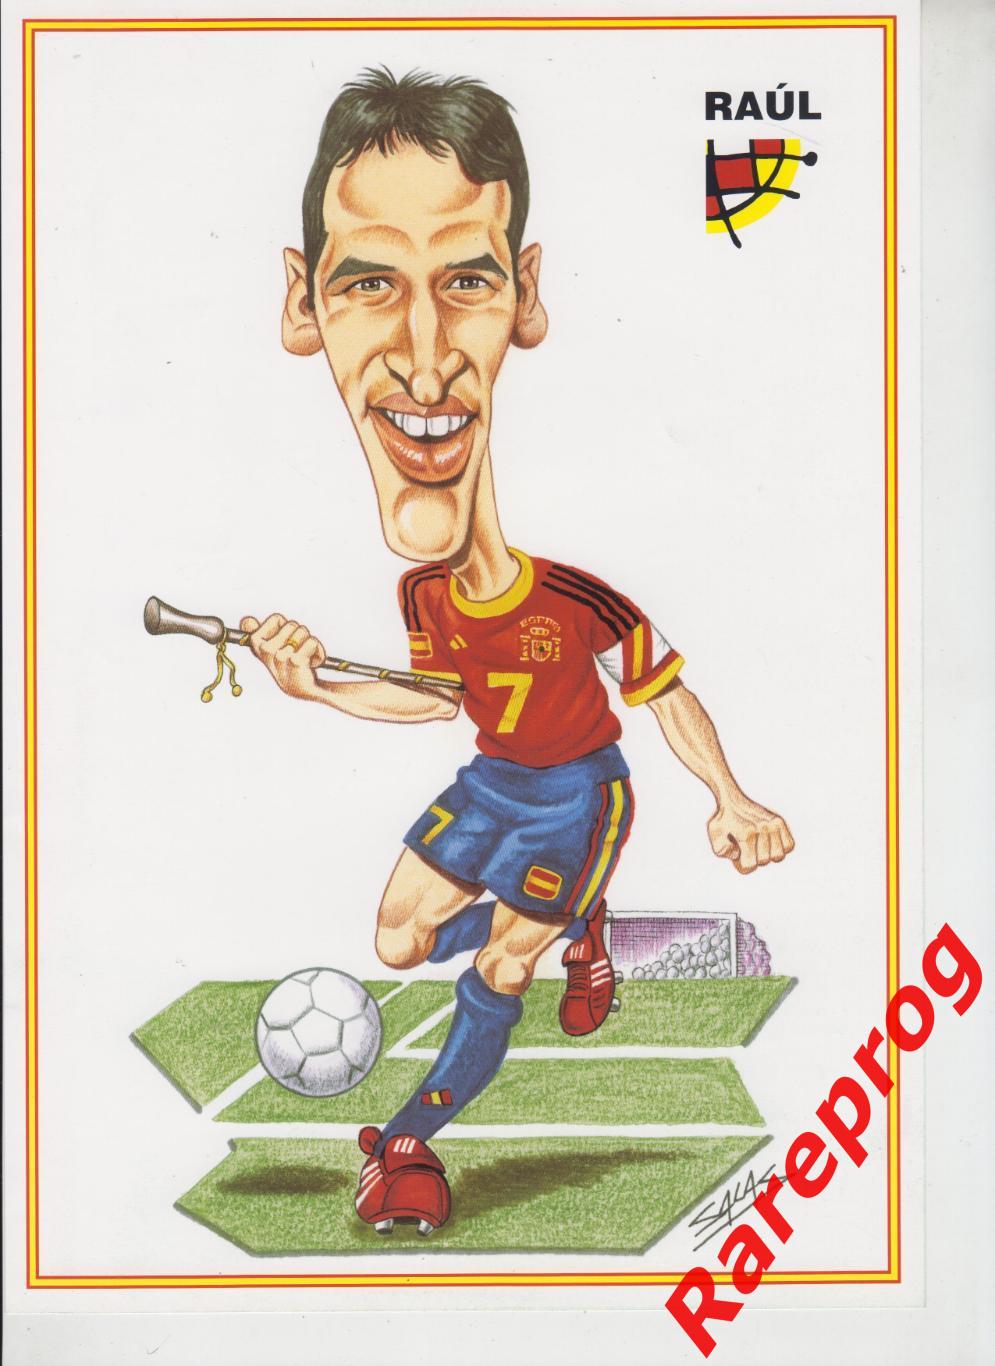 журнал Футбол RFEF Испания № 50 март 2003 - постер Raul 1